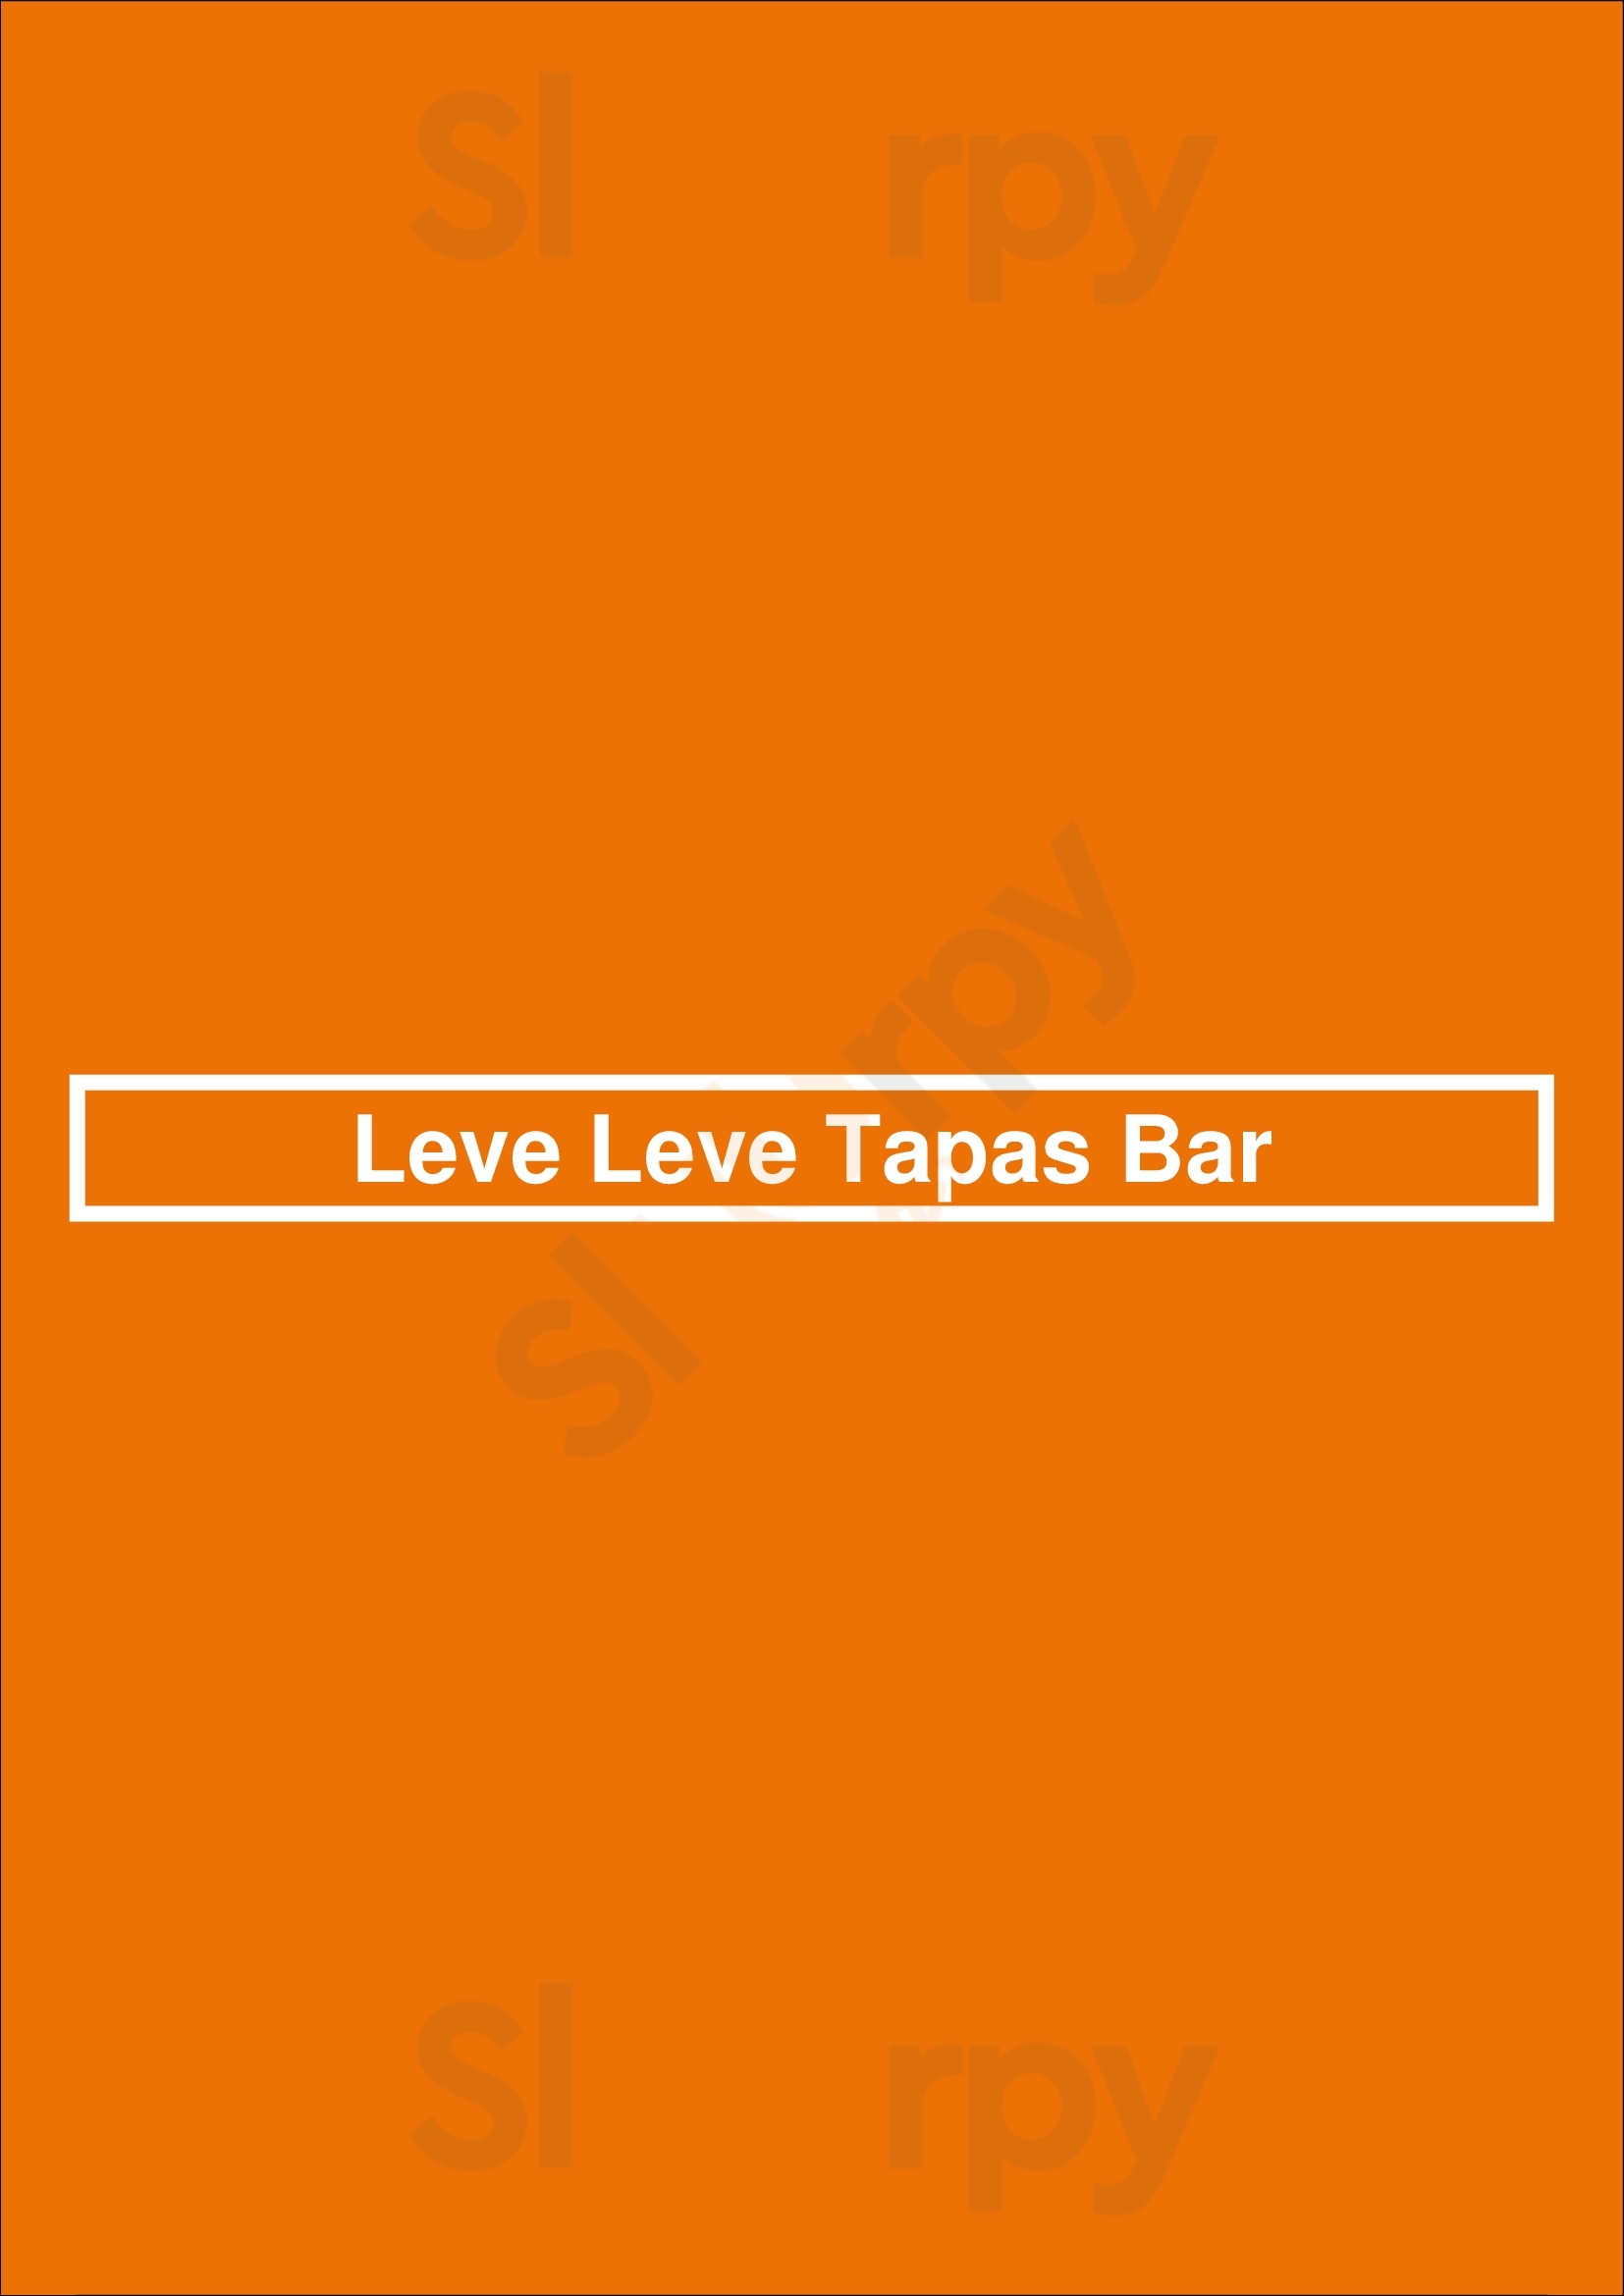 Leve Leve Tapas Bar Lisboa Menu - 1